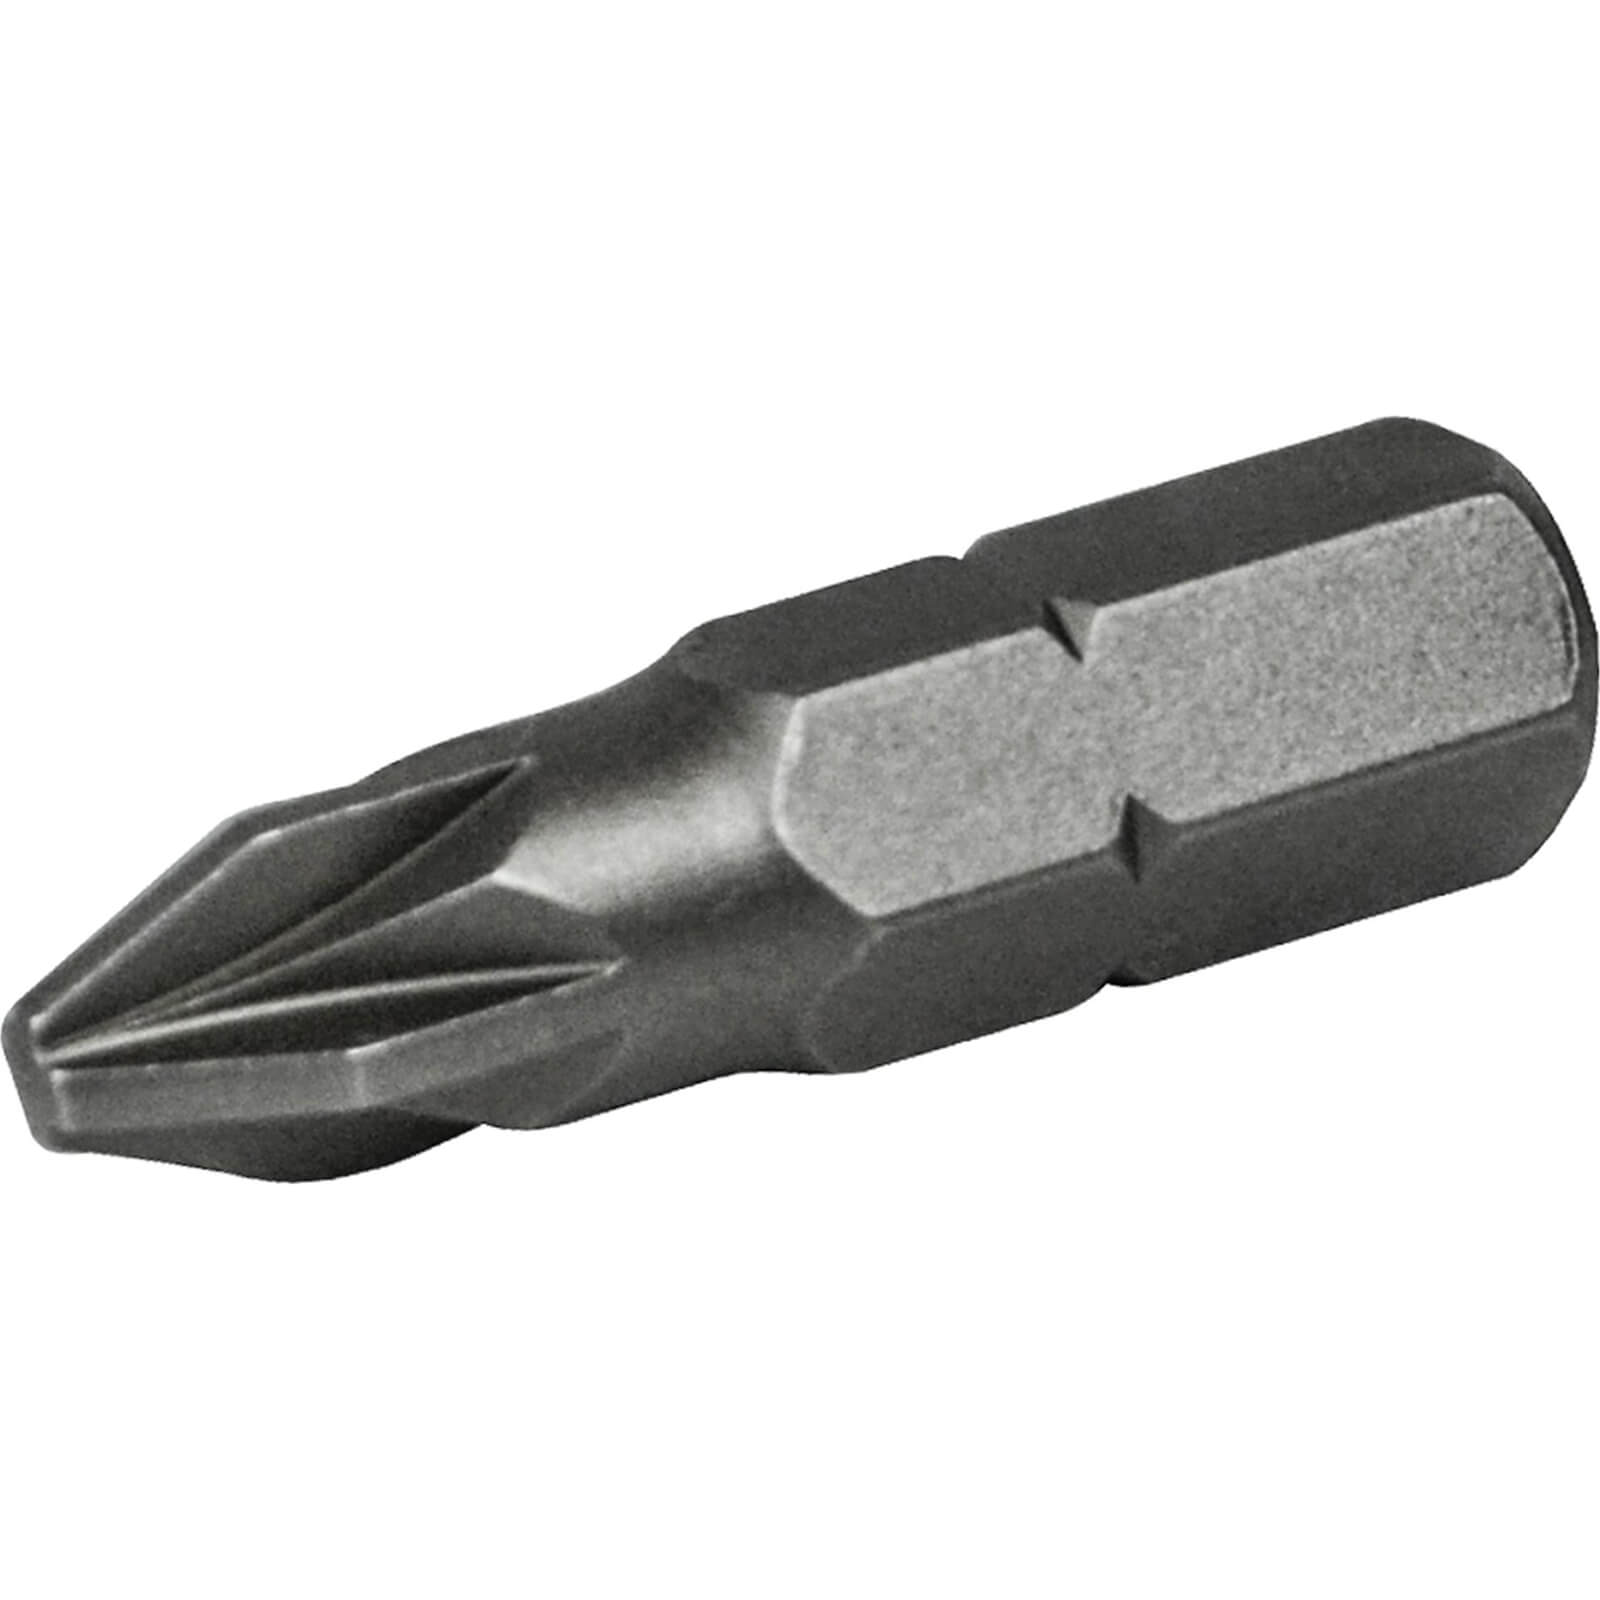 Image of Faithfull Pozi S2 Grade Steel Screwdriver Bits PZ1 25mm Pack of 3